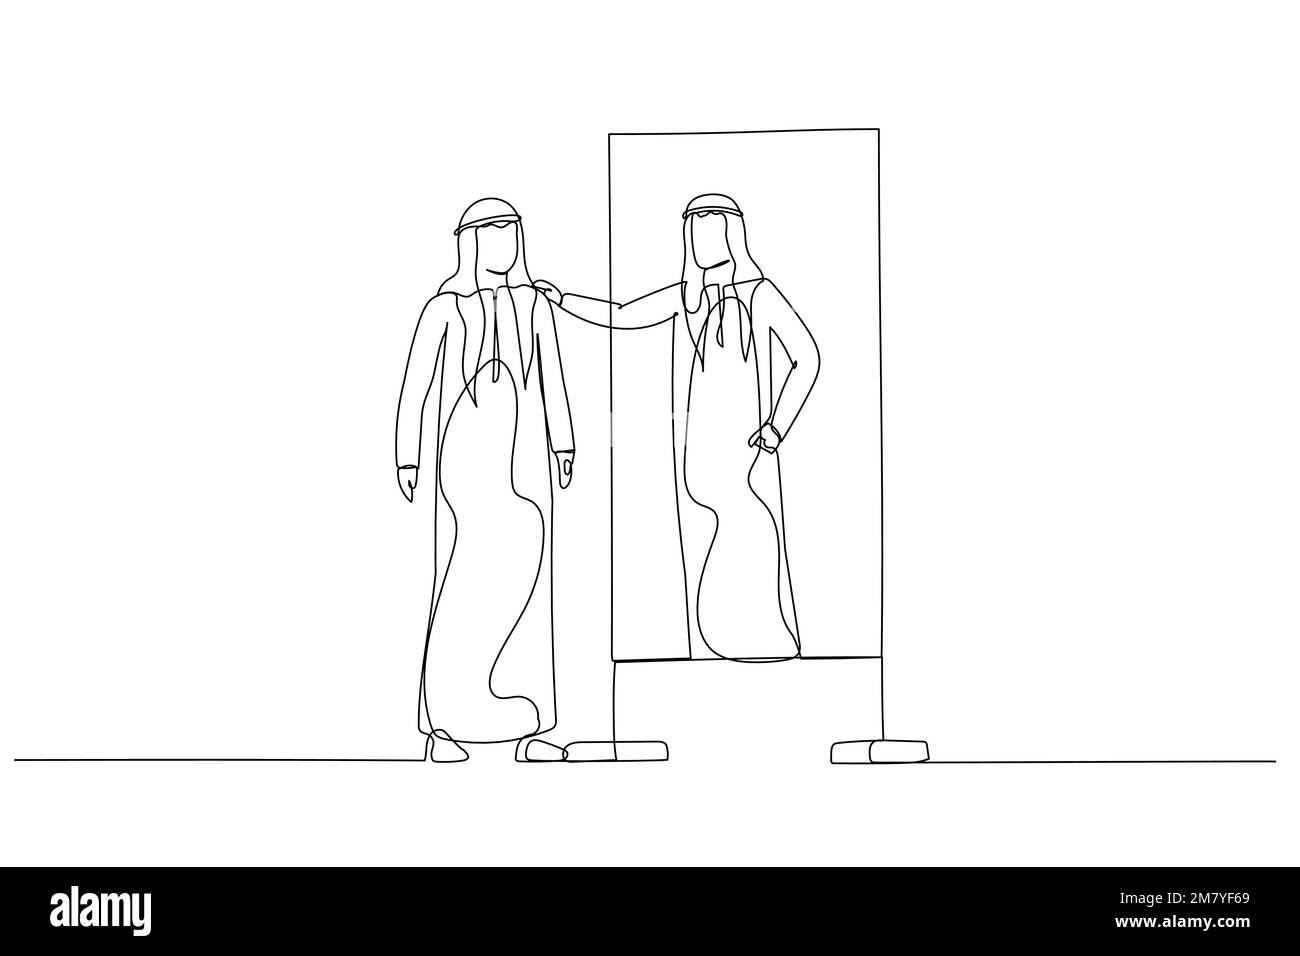 Cartoon of arab man looking into mirror embrace self concept of self esteem self care. Single continuous line art style design Stock Vector